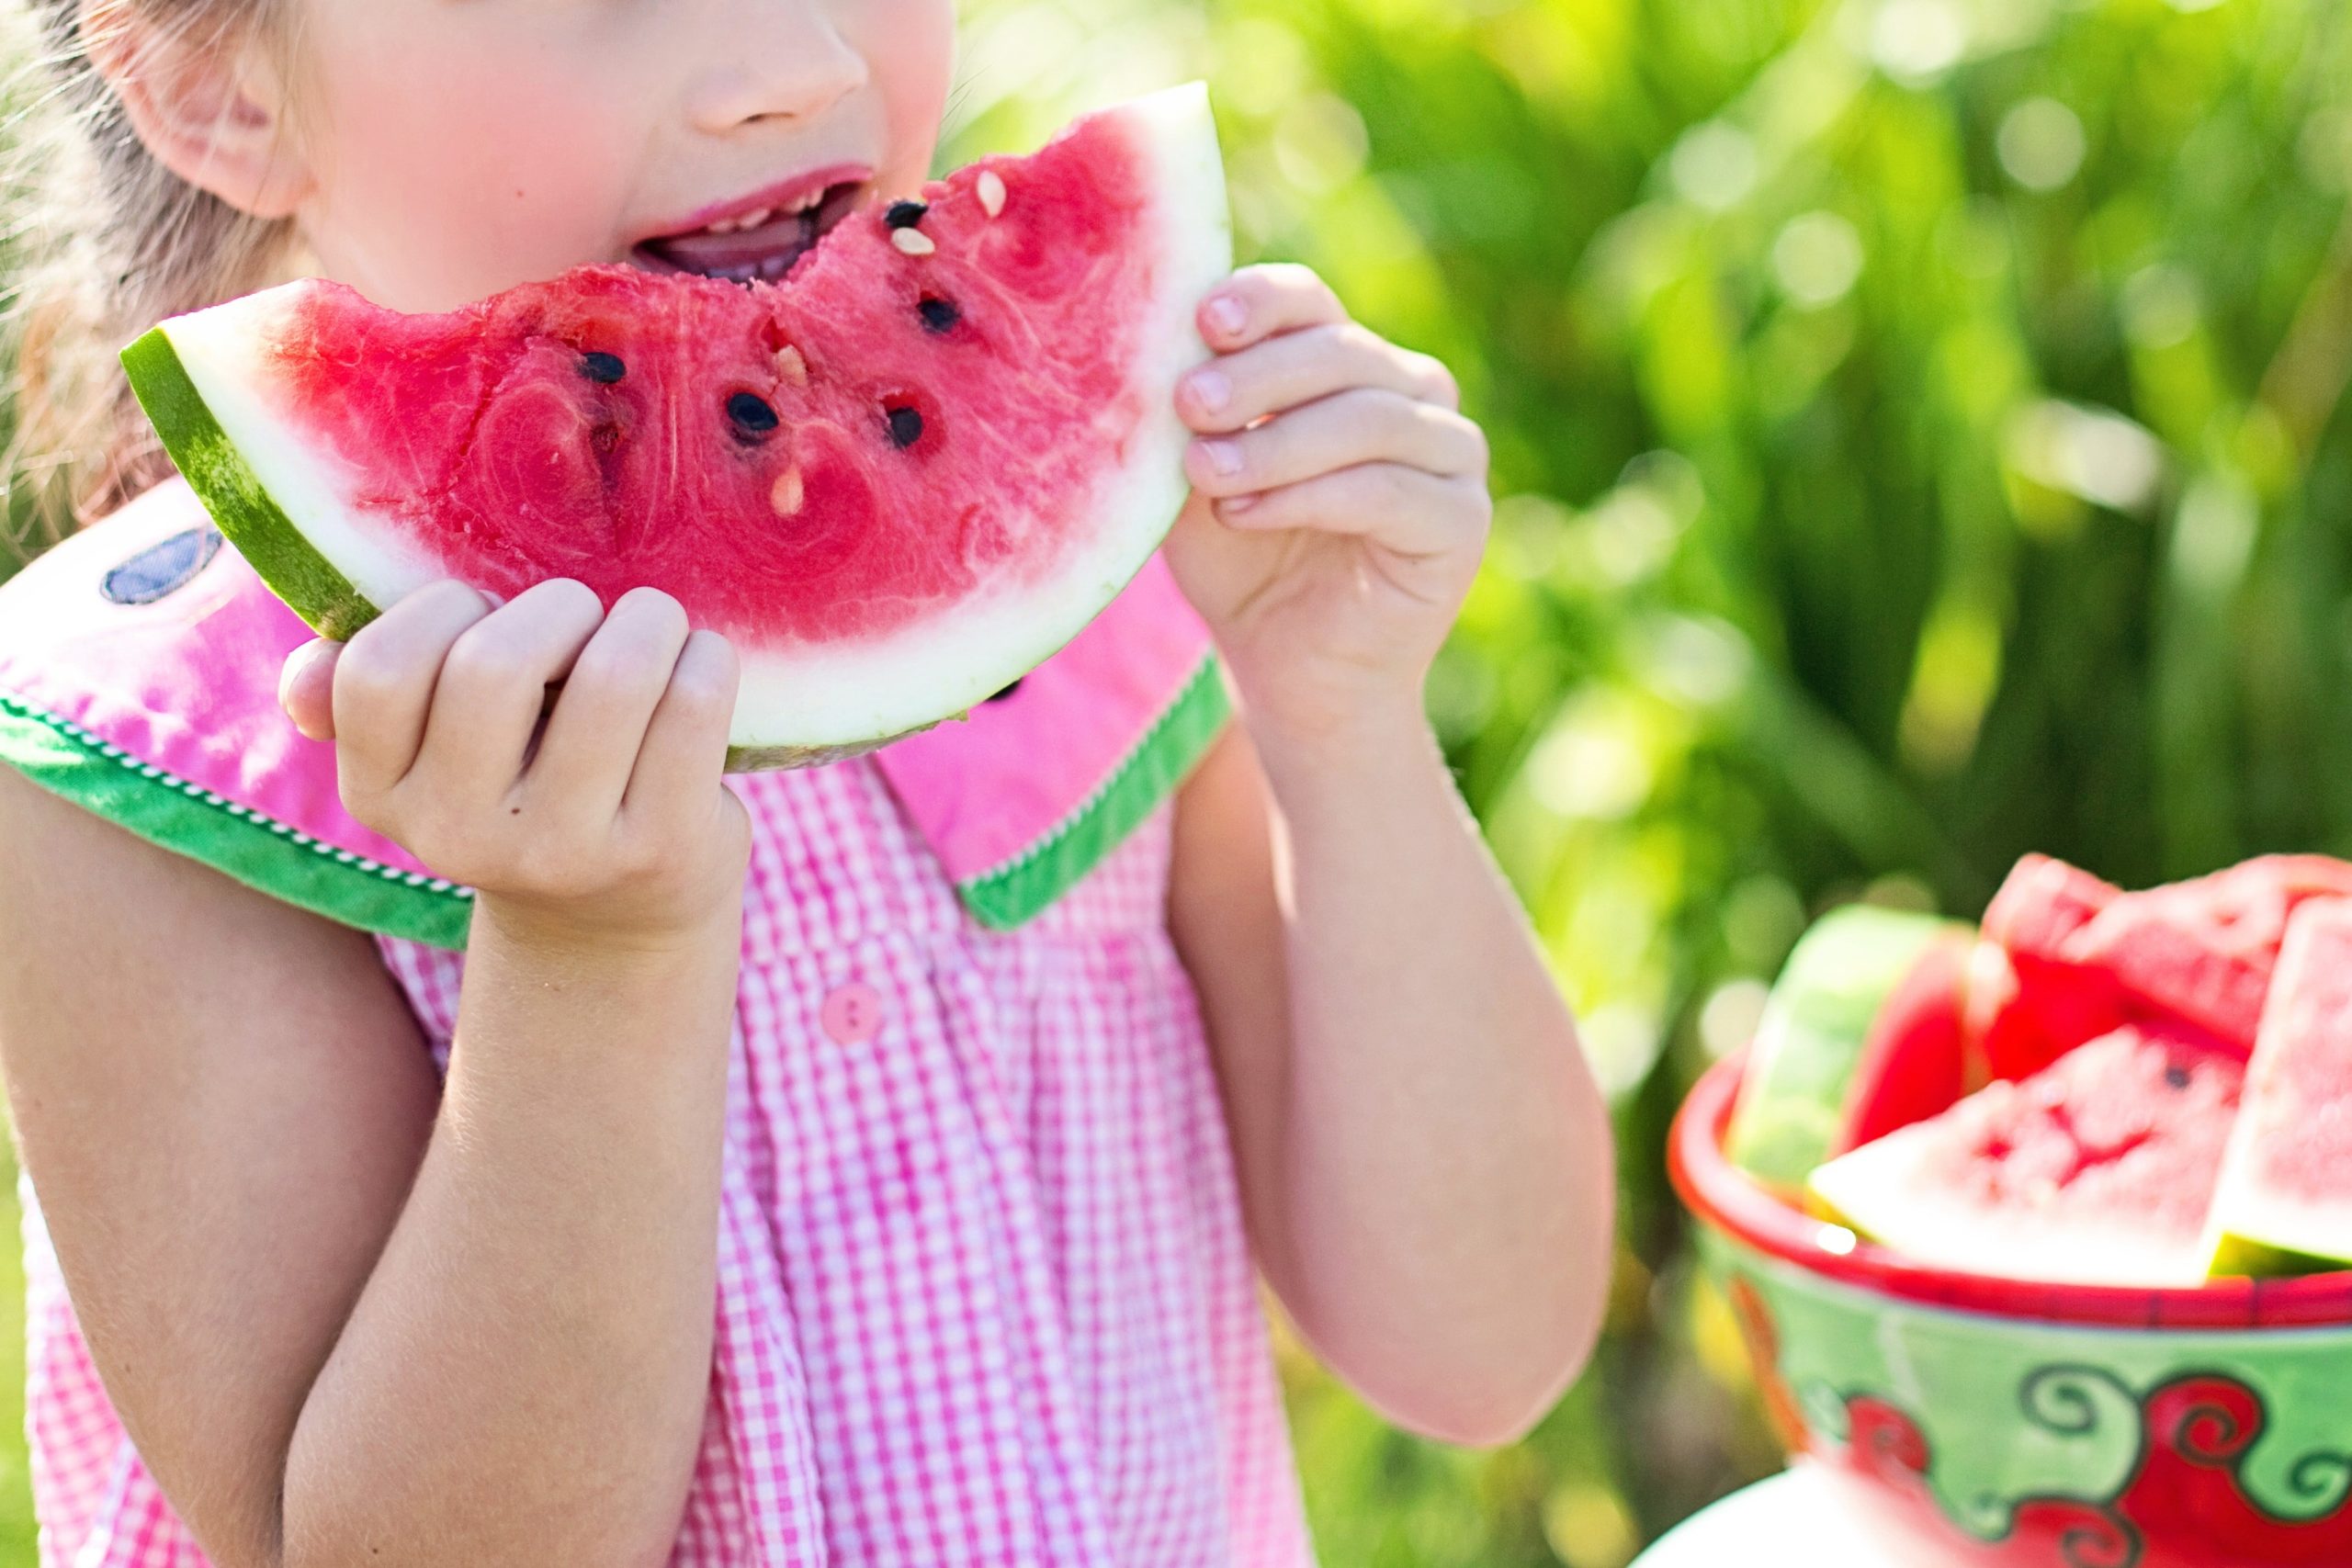 little girl eating watermelon - how to make your summer custody arrangement work